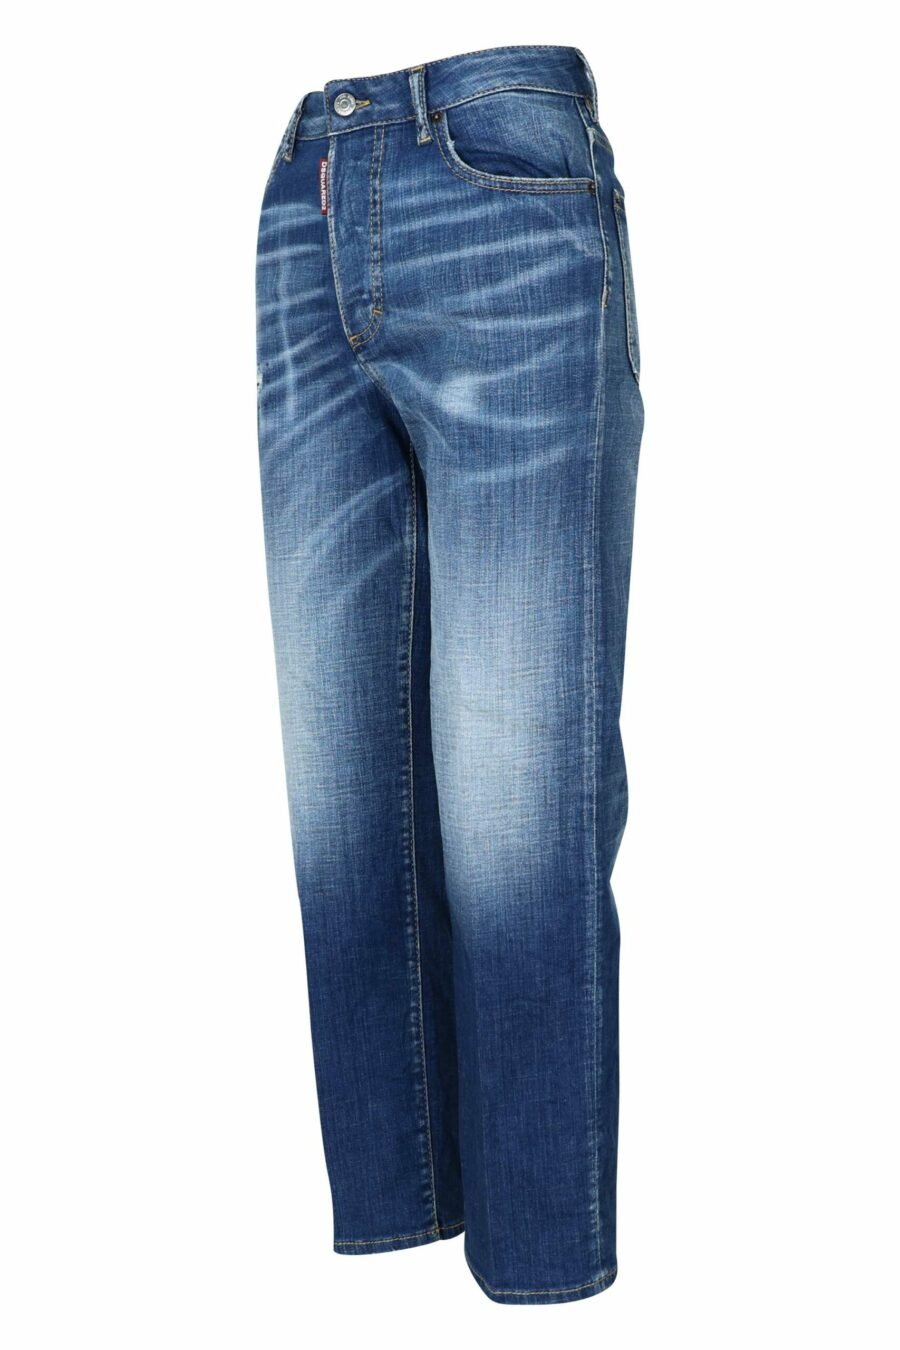 Blaue "Boston Jeans" getragene Hose - 8054148460044 1 skaliert